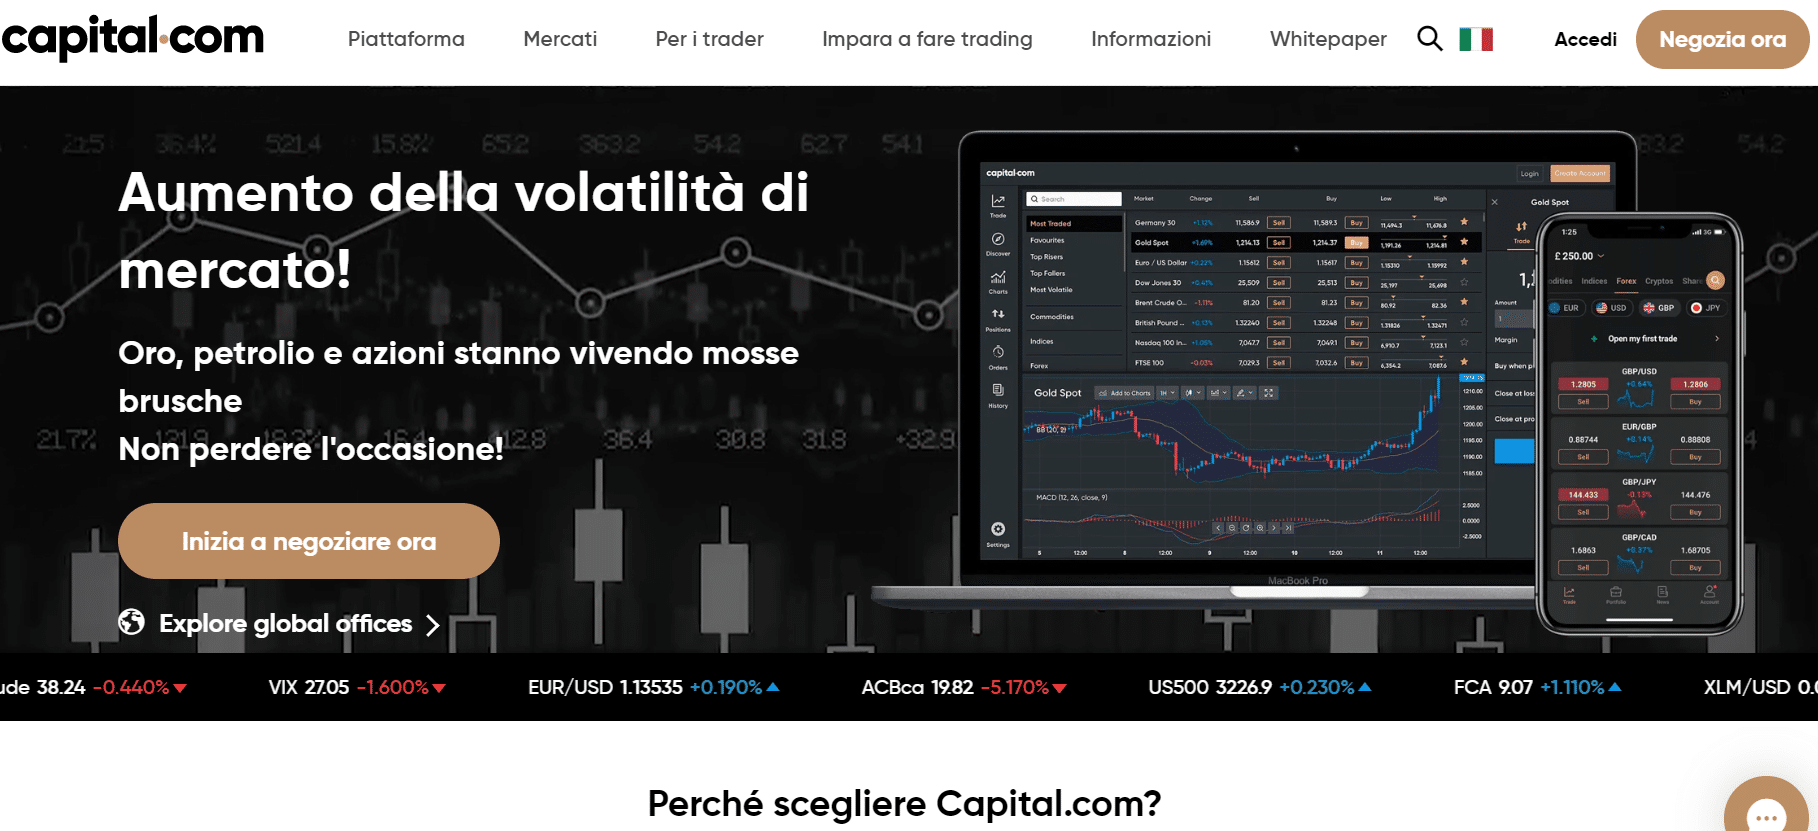 Capital.com leva finanziaria